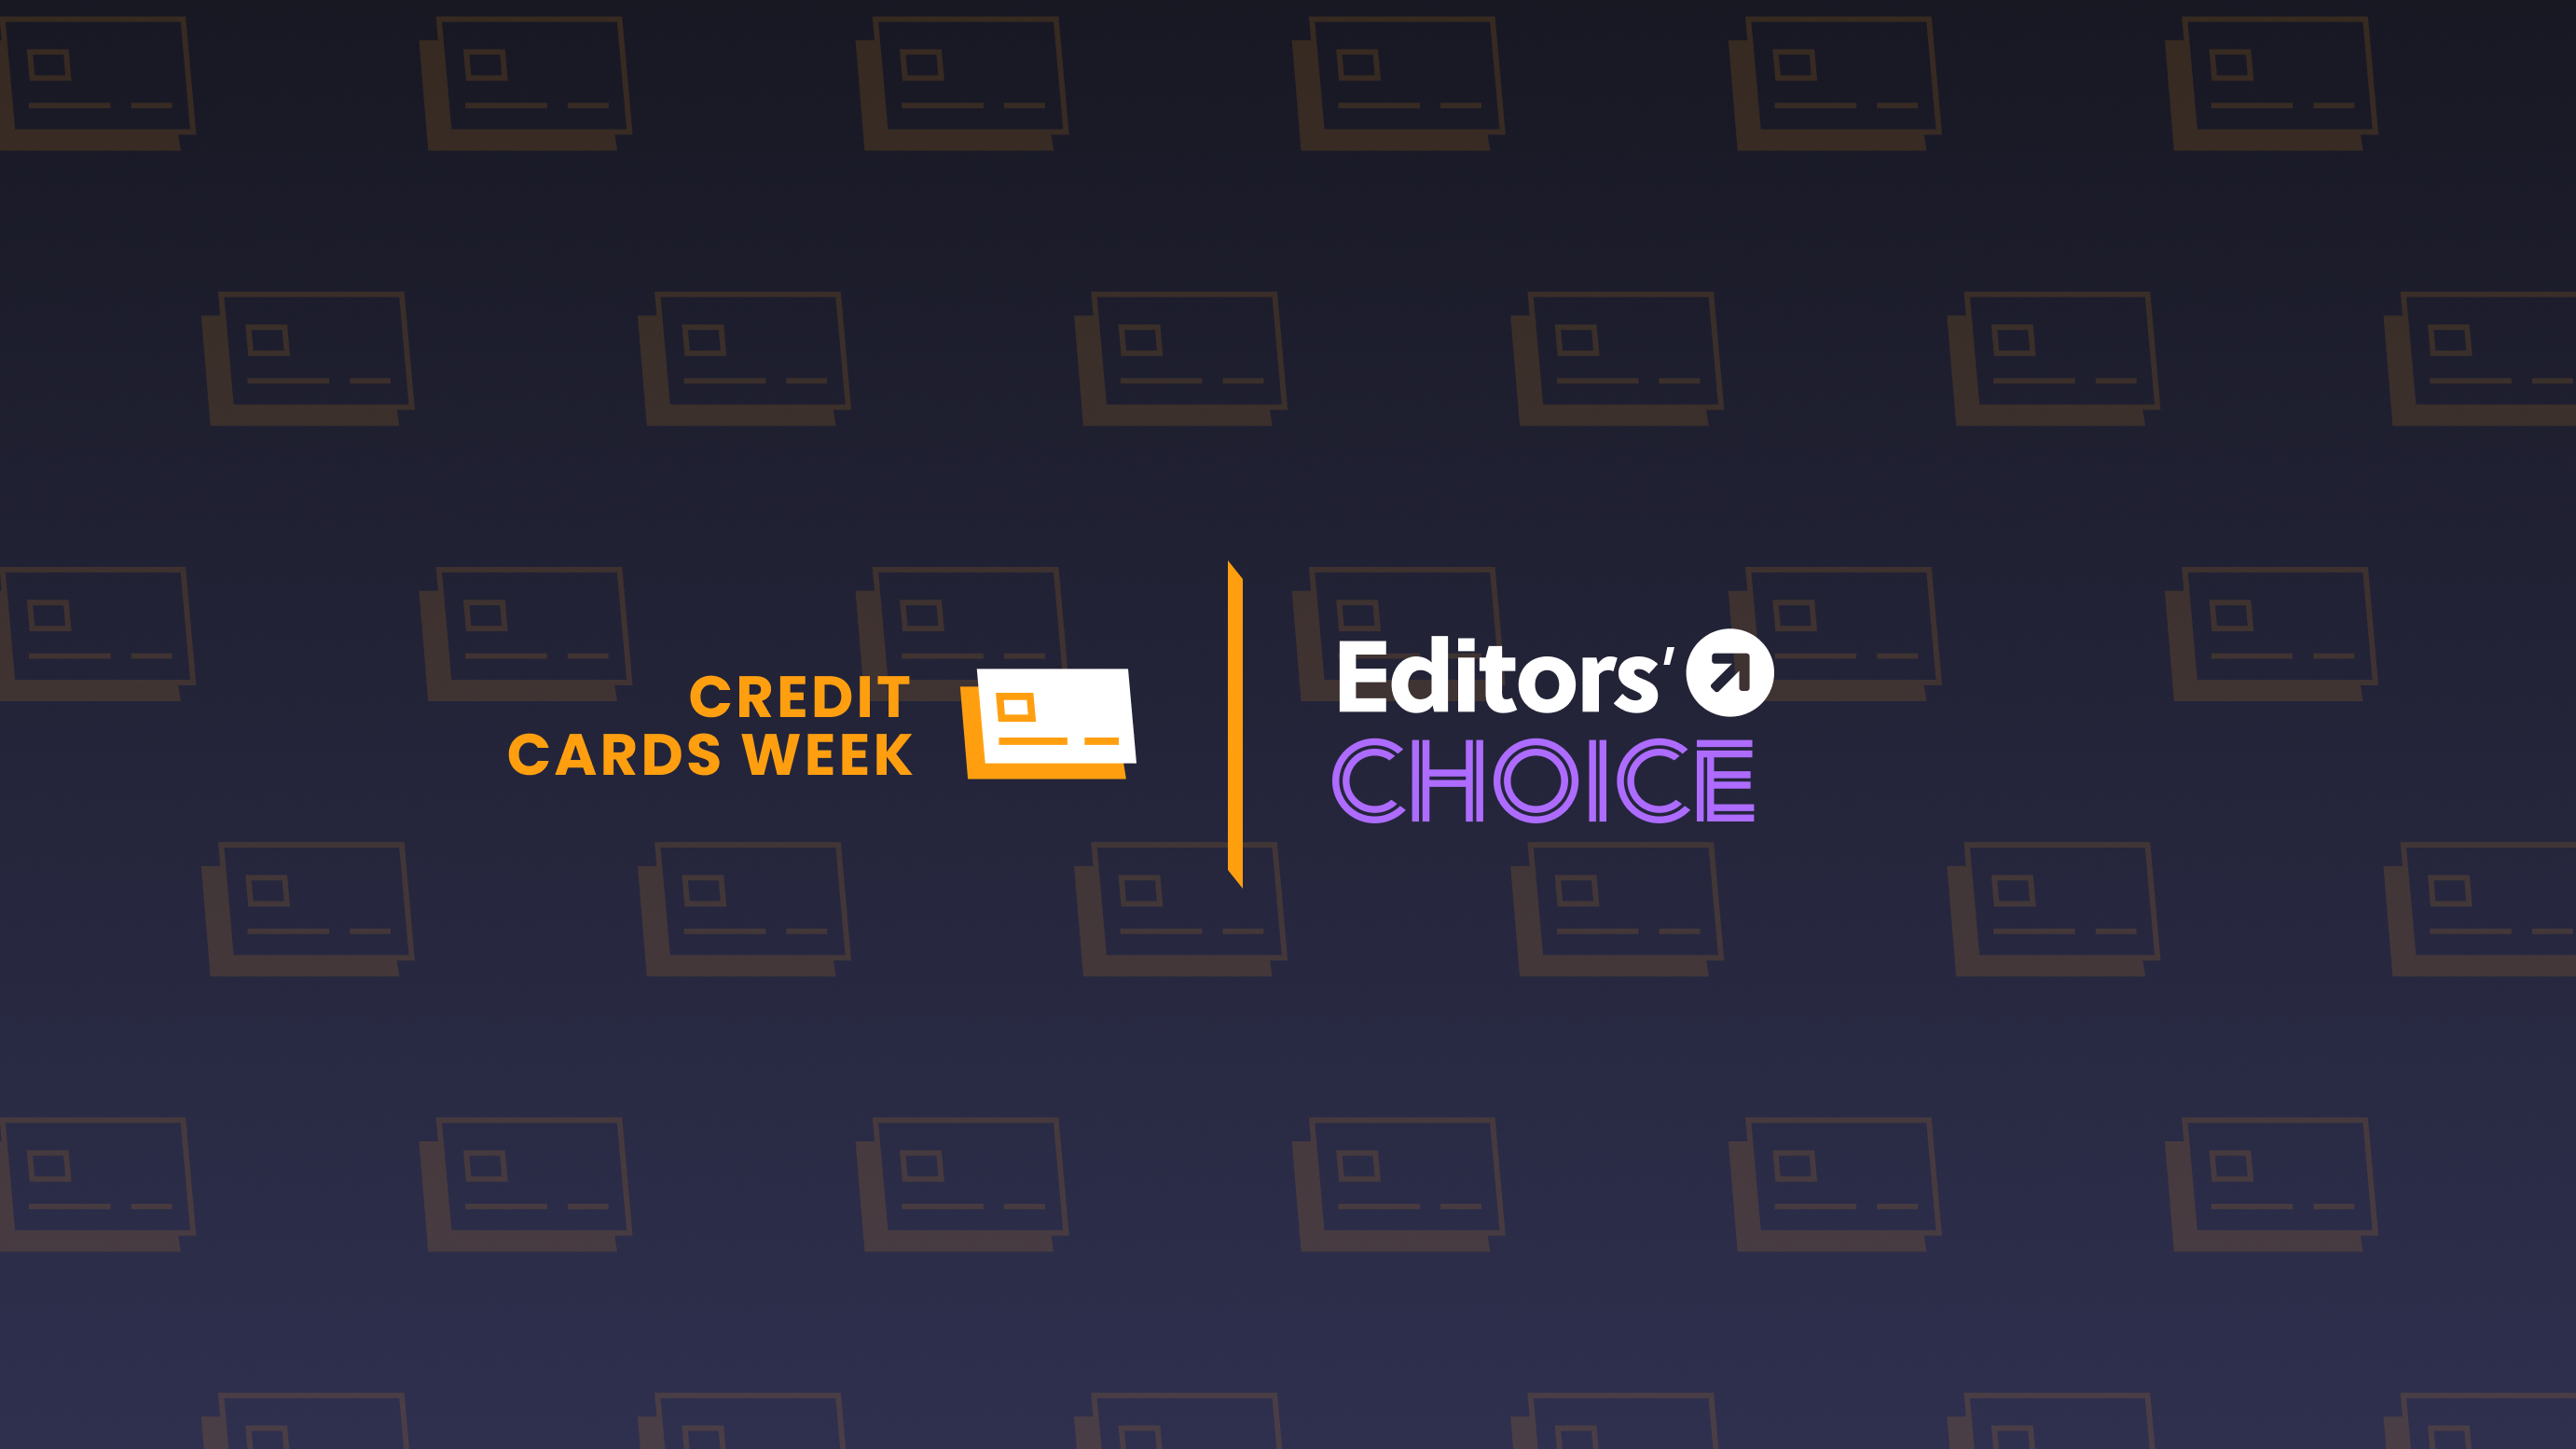 Featured Image - Editors Choice - Credit Card Week B (1)